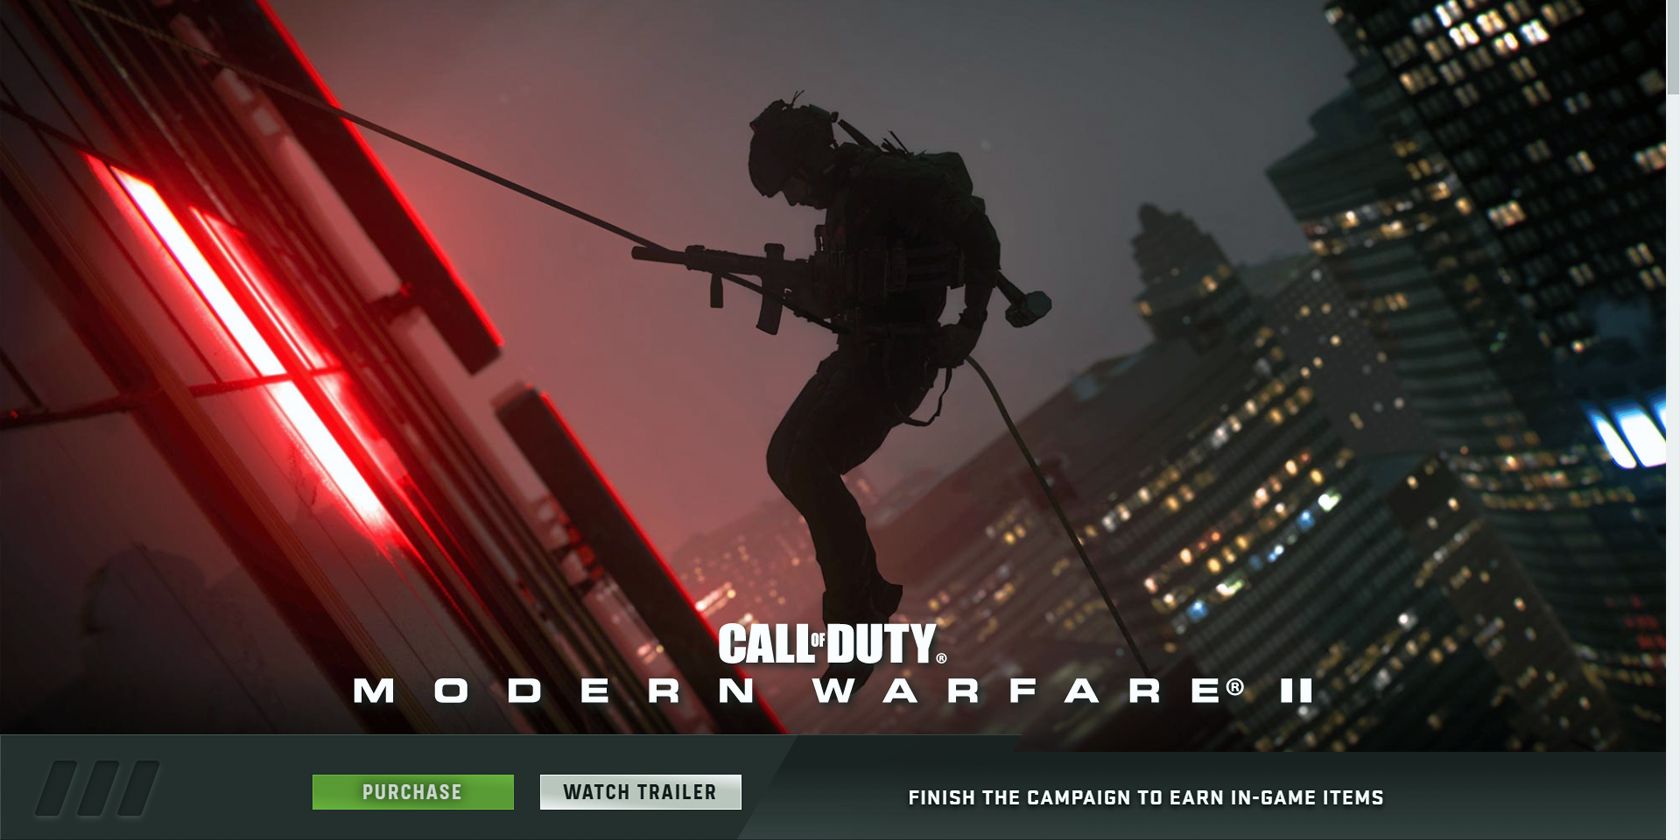 Capture d'écran de la page d'accueil de la campagne Call of Duty Modern Warfare II